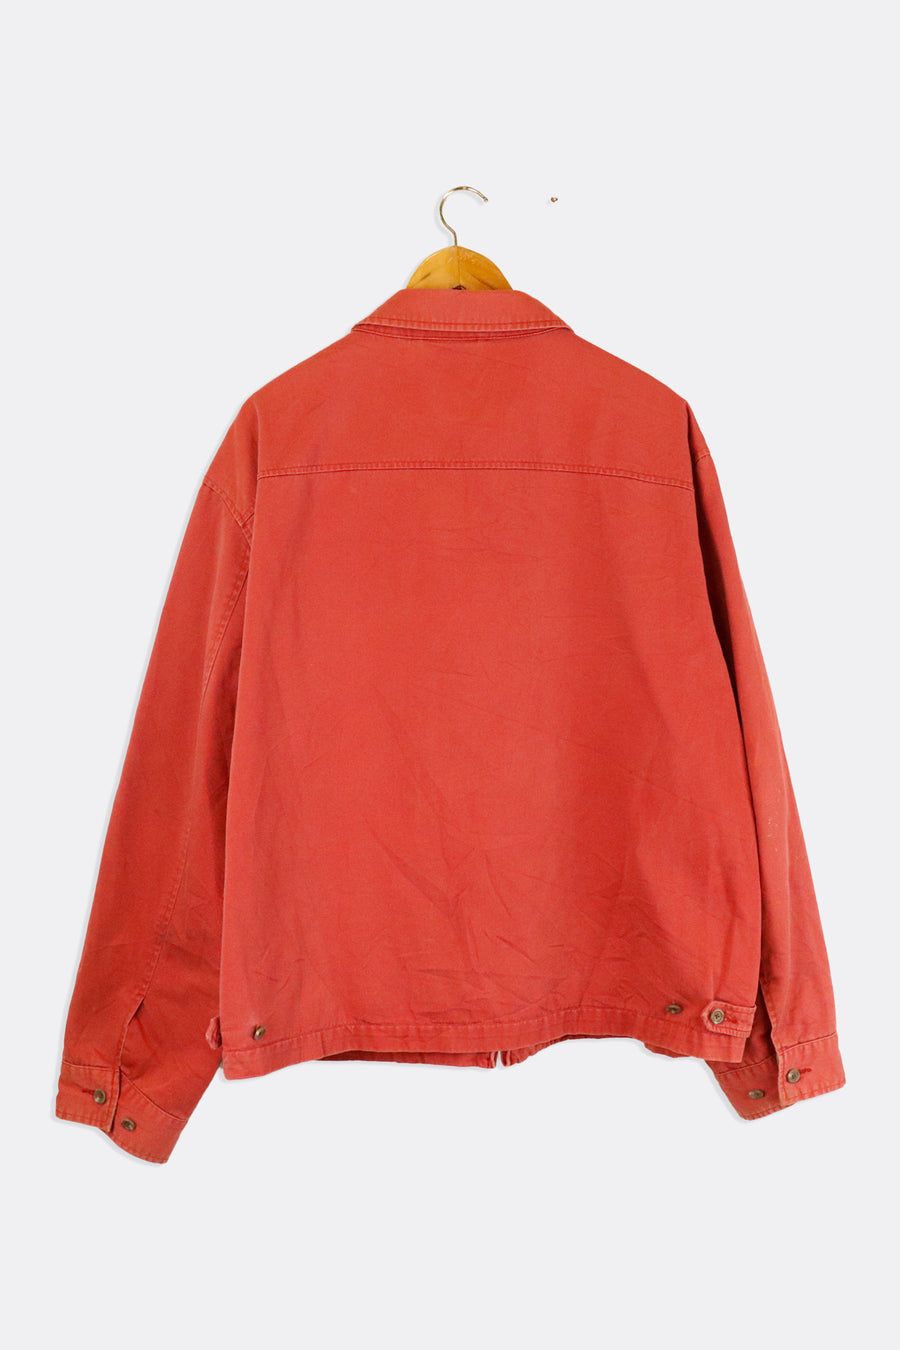 Vintage Polo By Raplh Lauren Full Zip Plaid Collared Jacket Outerwear Sz 2XL